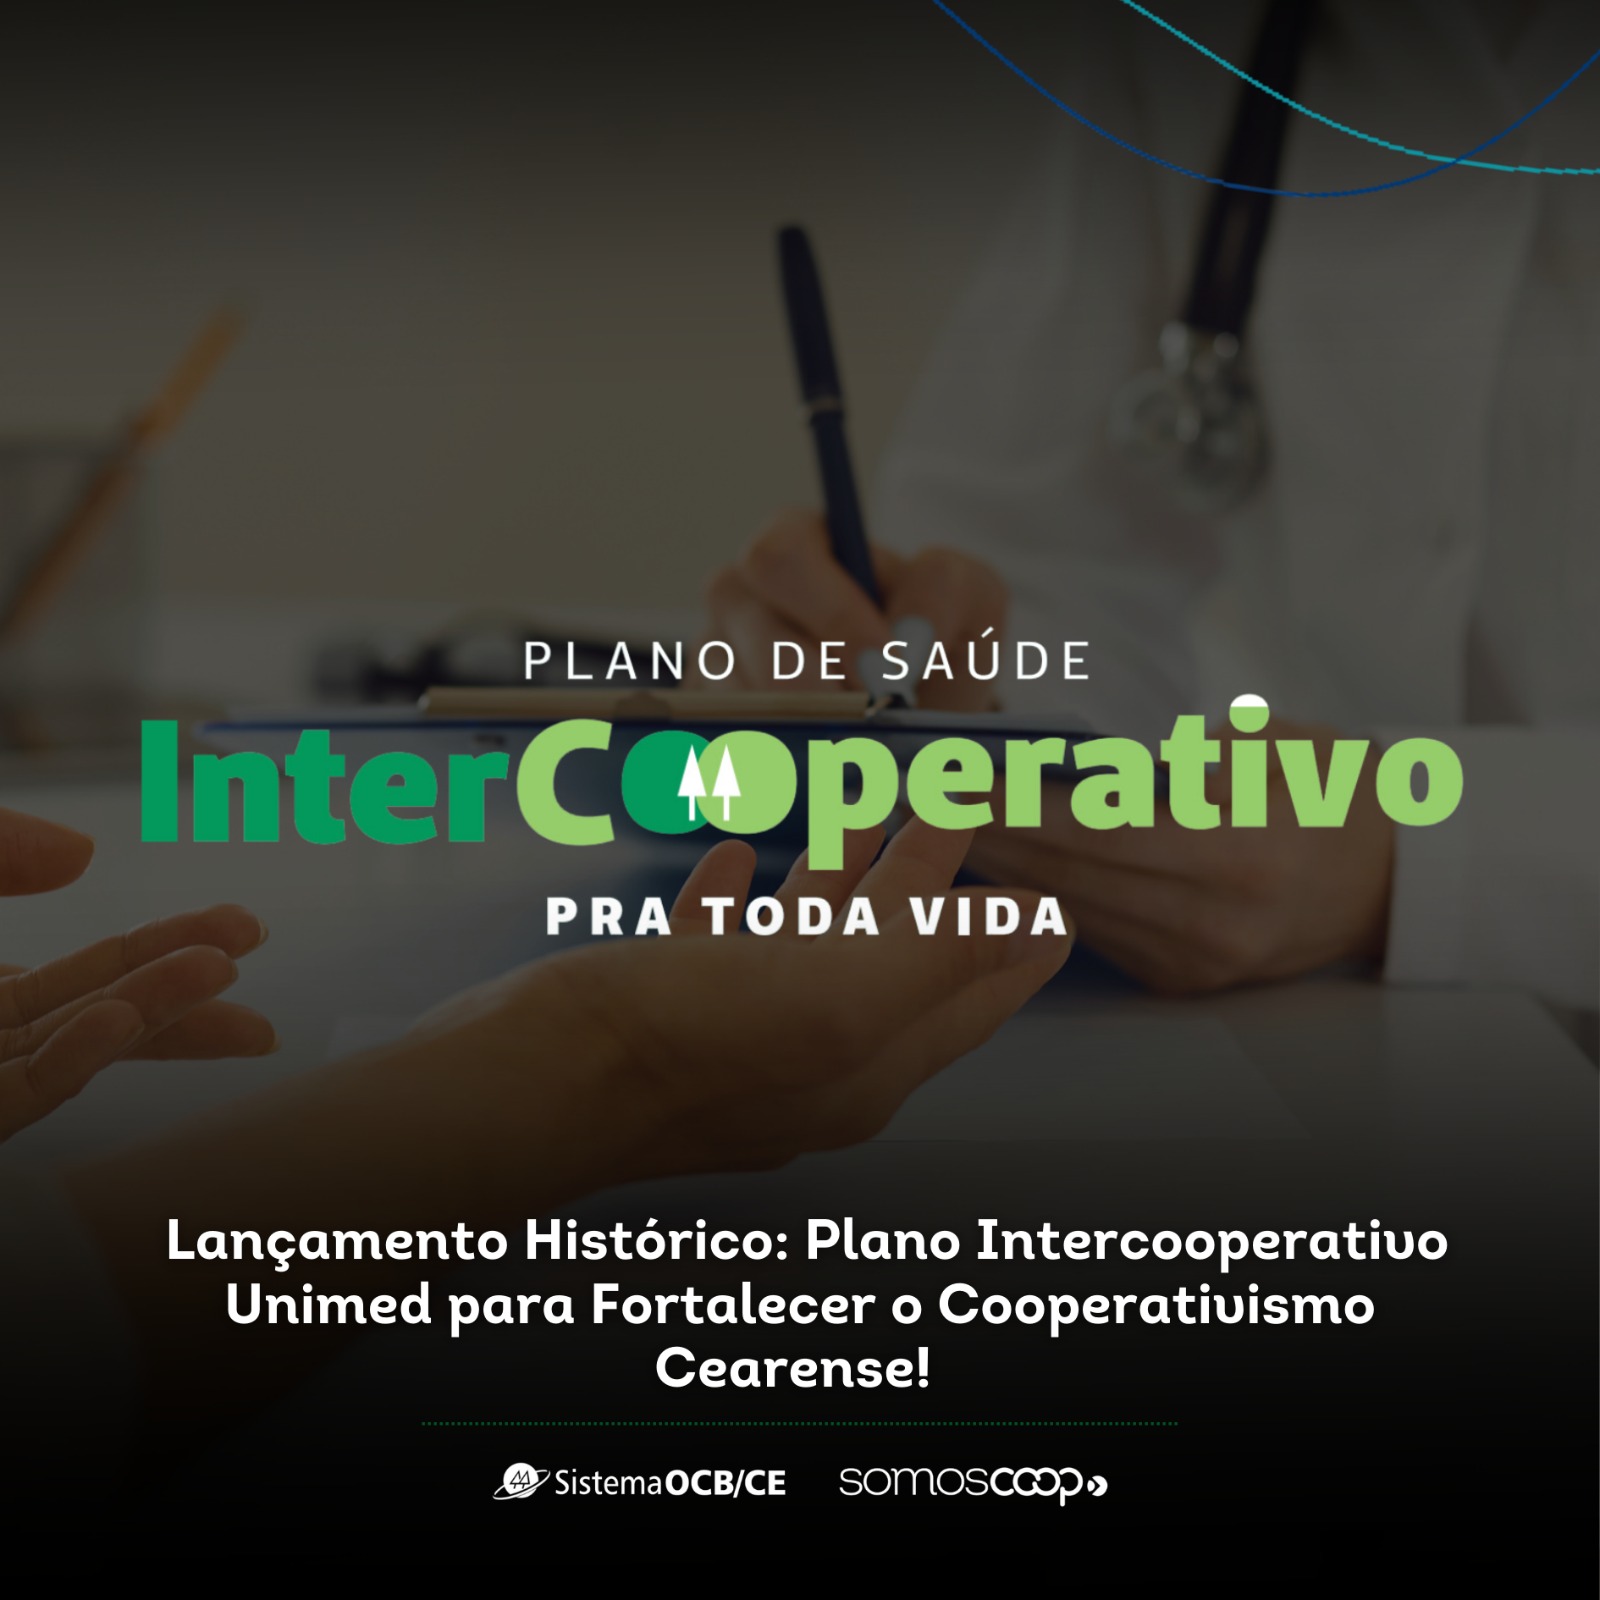 Plano Intercooperativo Unimed para fortalecer o Cooperativismo Cearense!